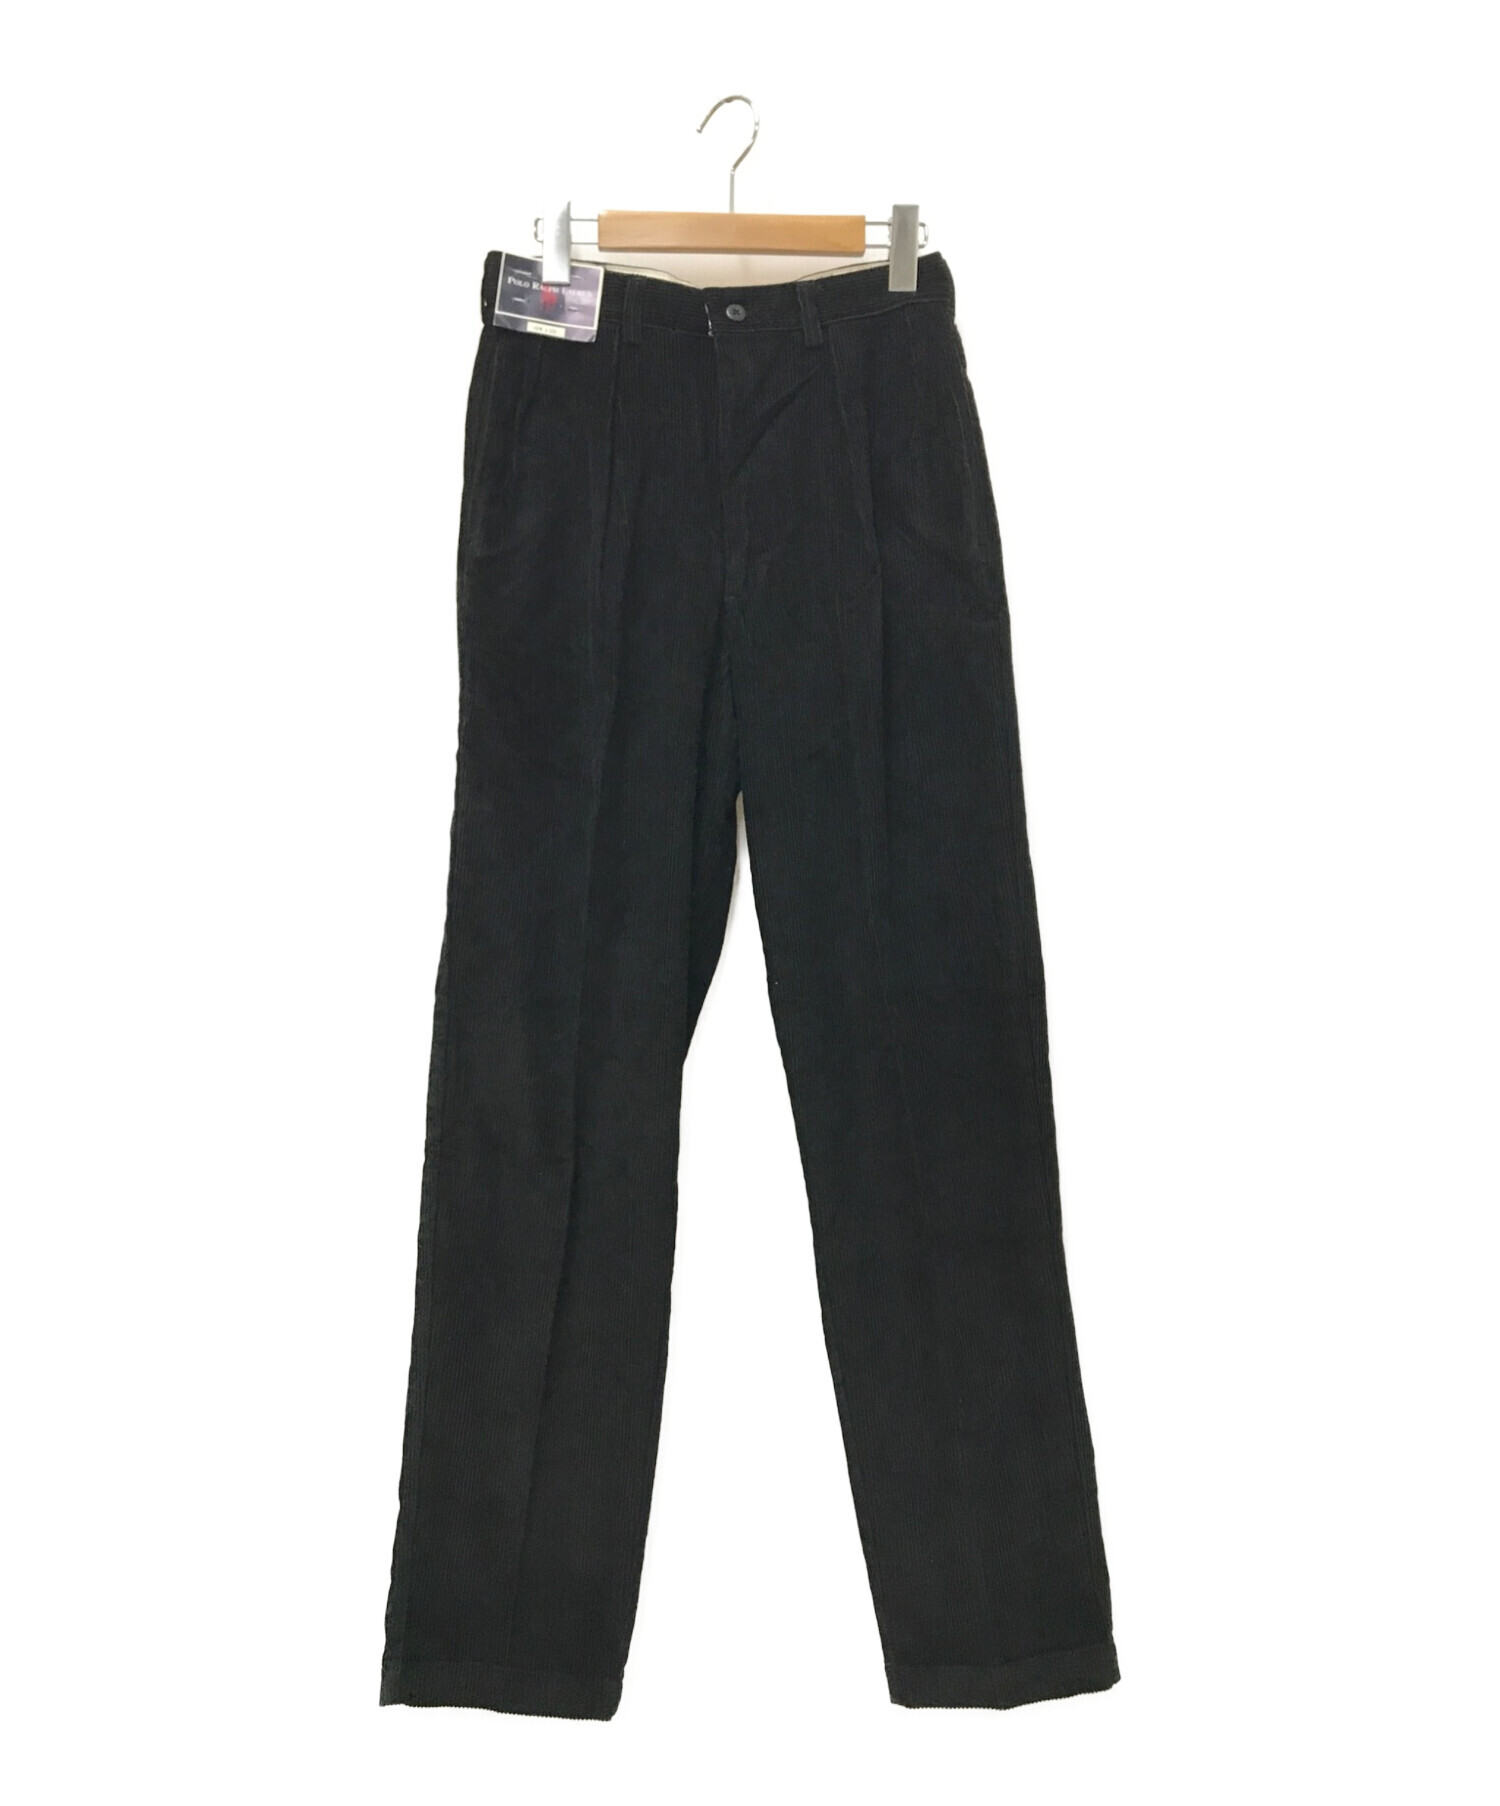 90s polo Ralph Lauren 2tuck corduroy pants 「HAMMOND PANTS」30×30 